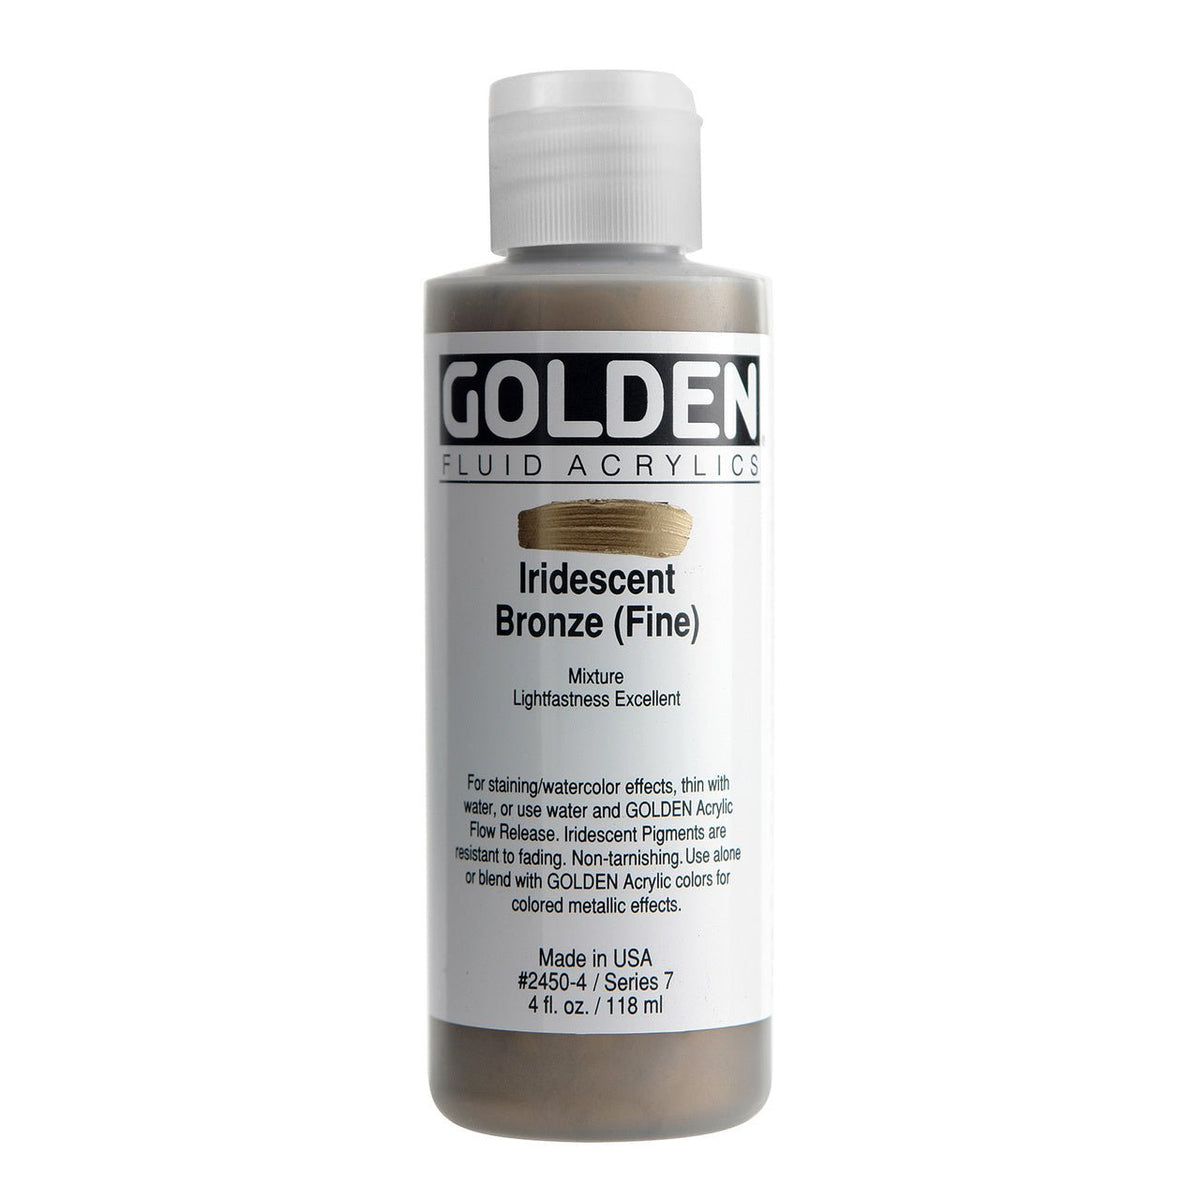 Golden Fluid Acrylic Iridescent Bronze (fine) 4 oz - merriartist.com